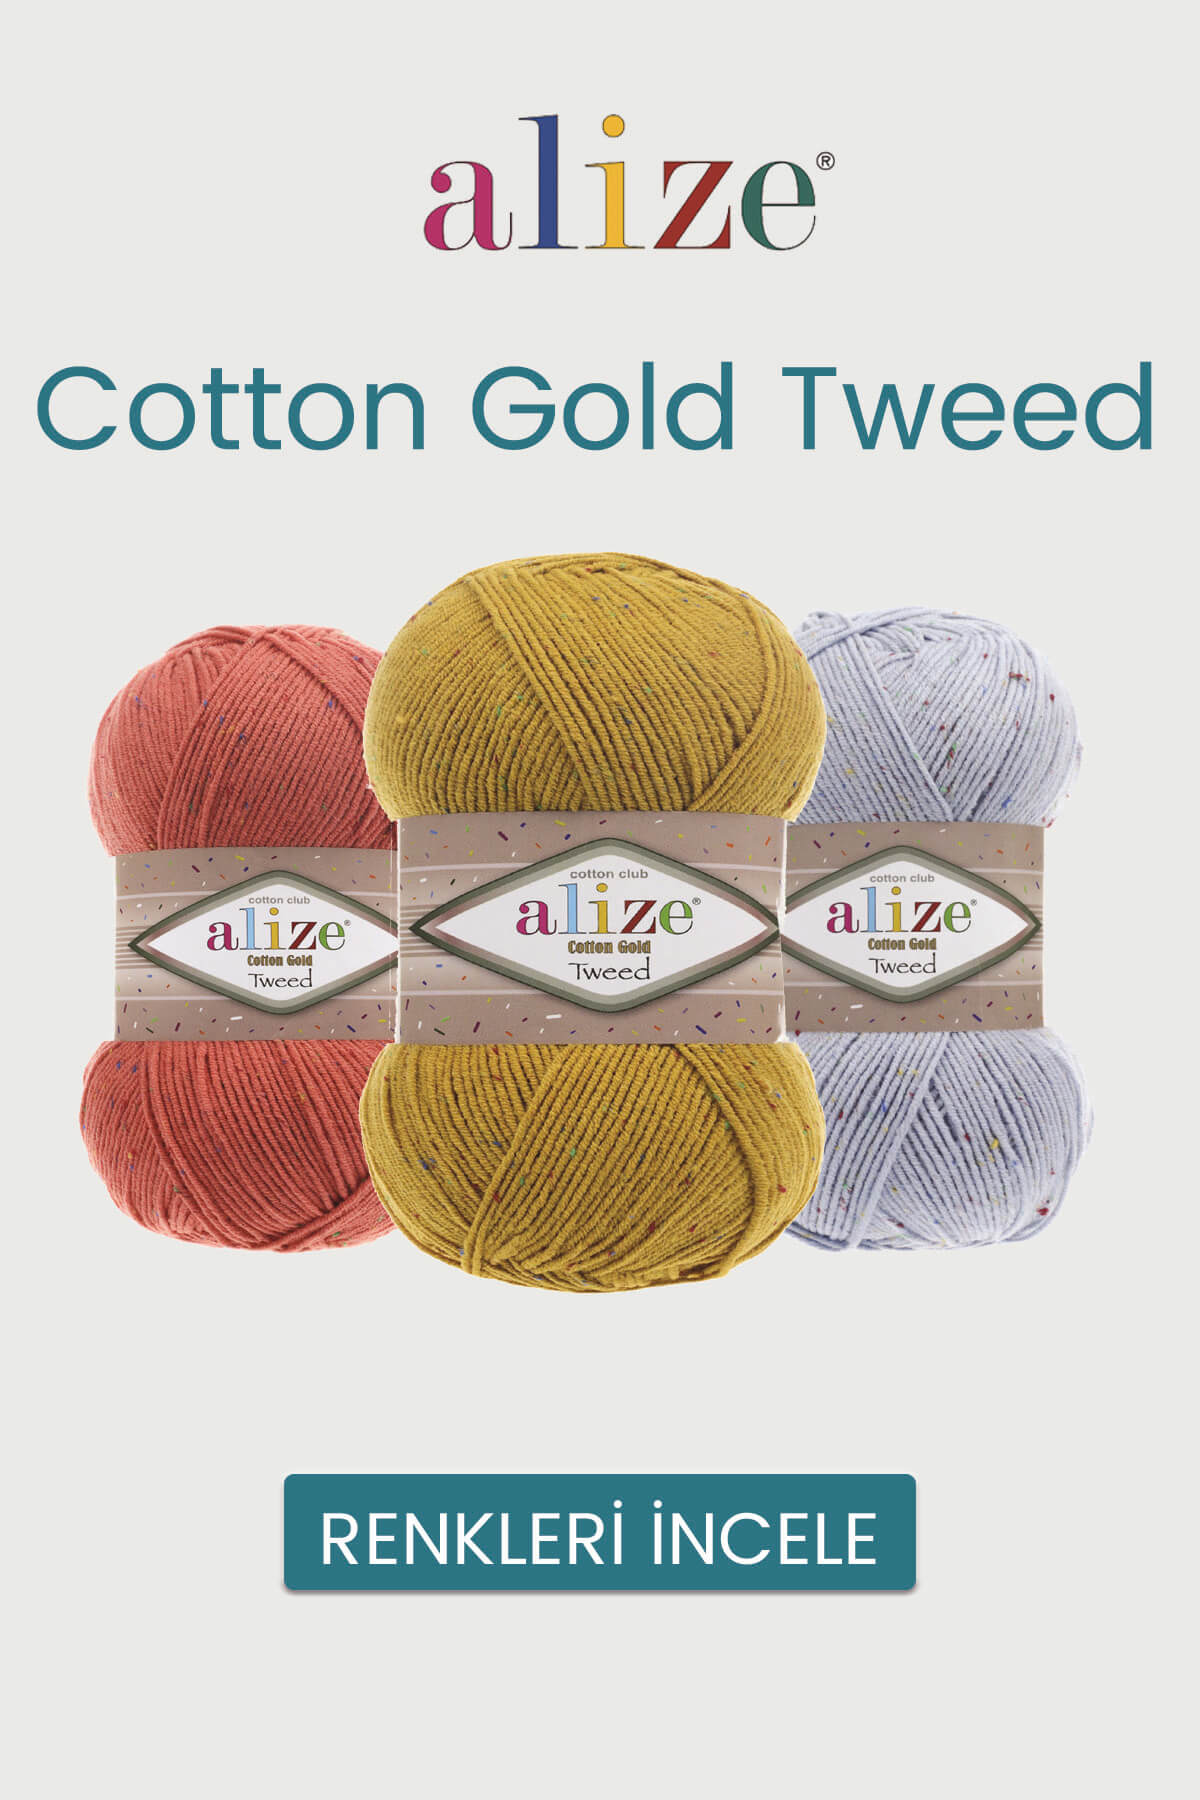 alize-cotton-gold-tweed-tekstilland